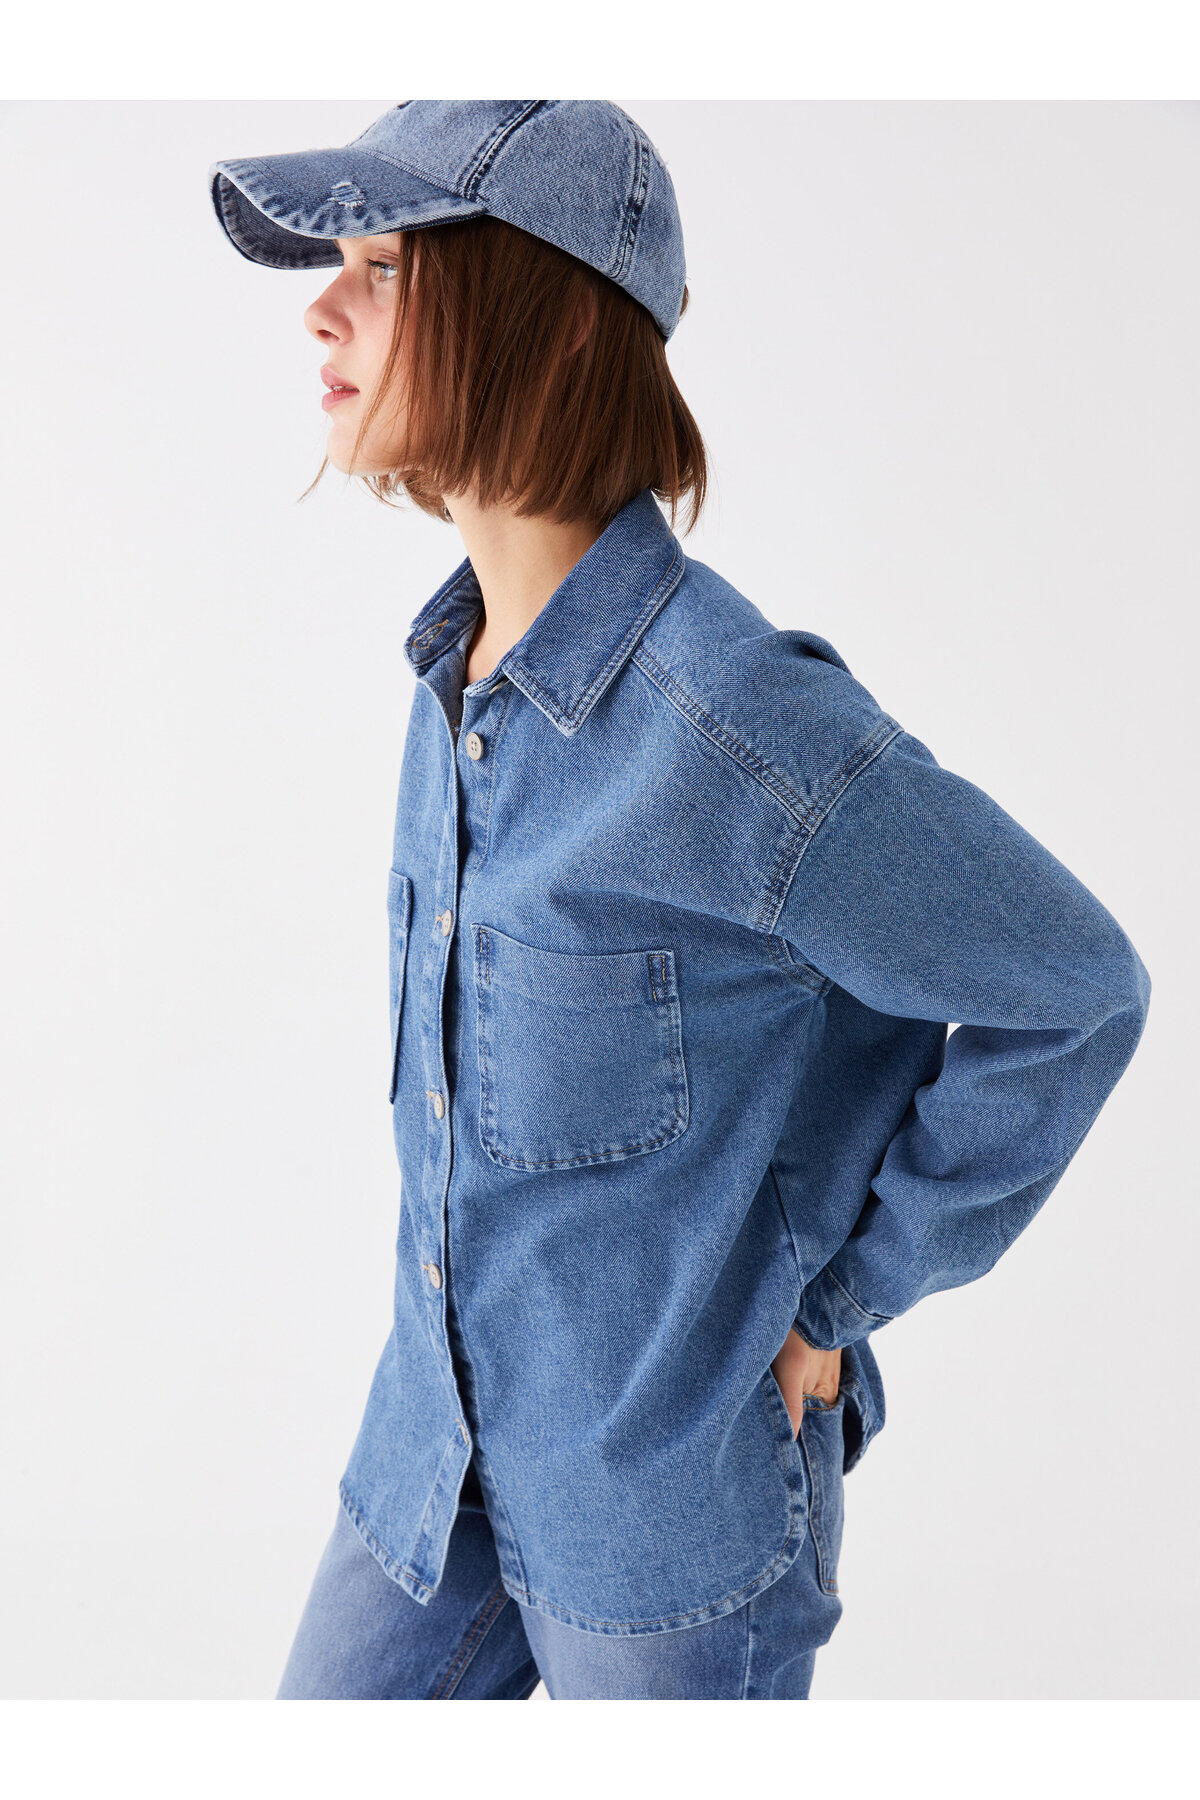 LC Waikiki Women's Straight Long Sleeve Oversize Jean Shirt Jacket